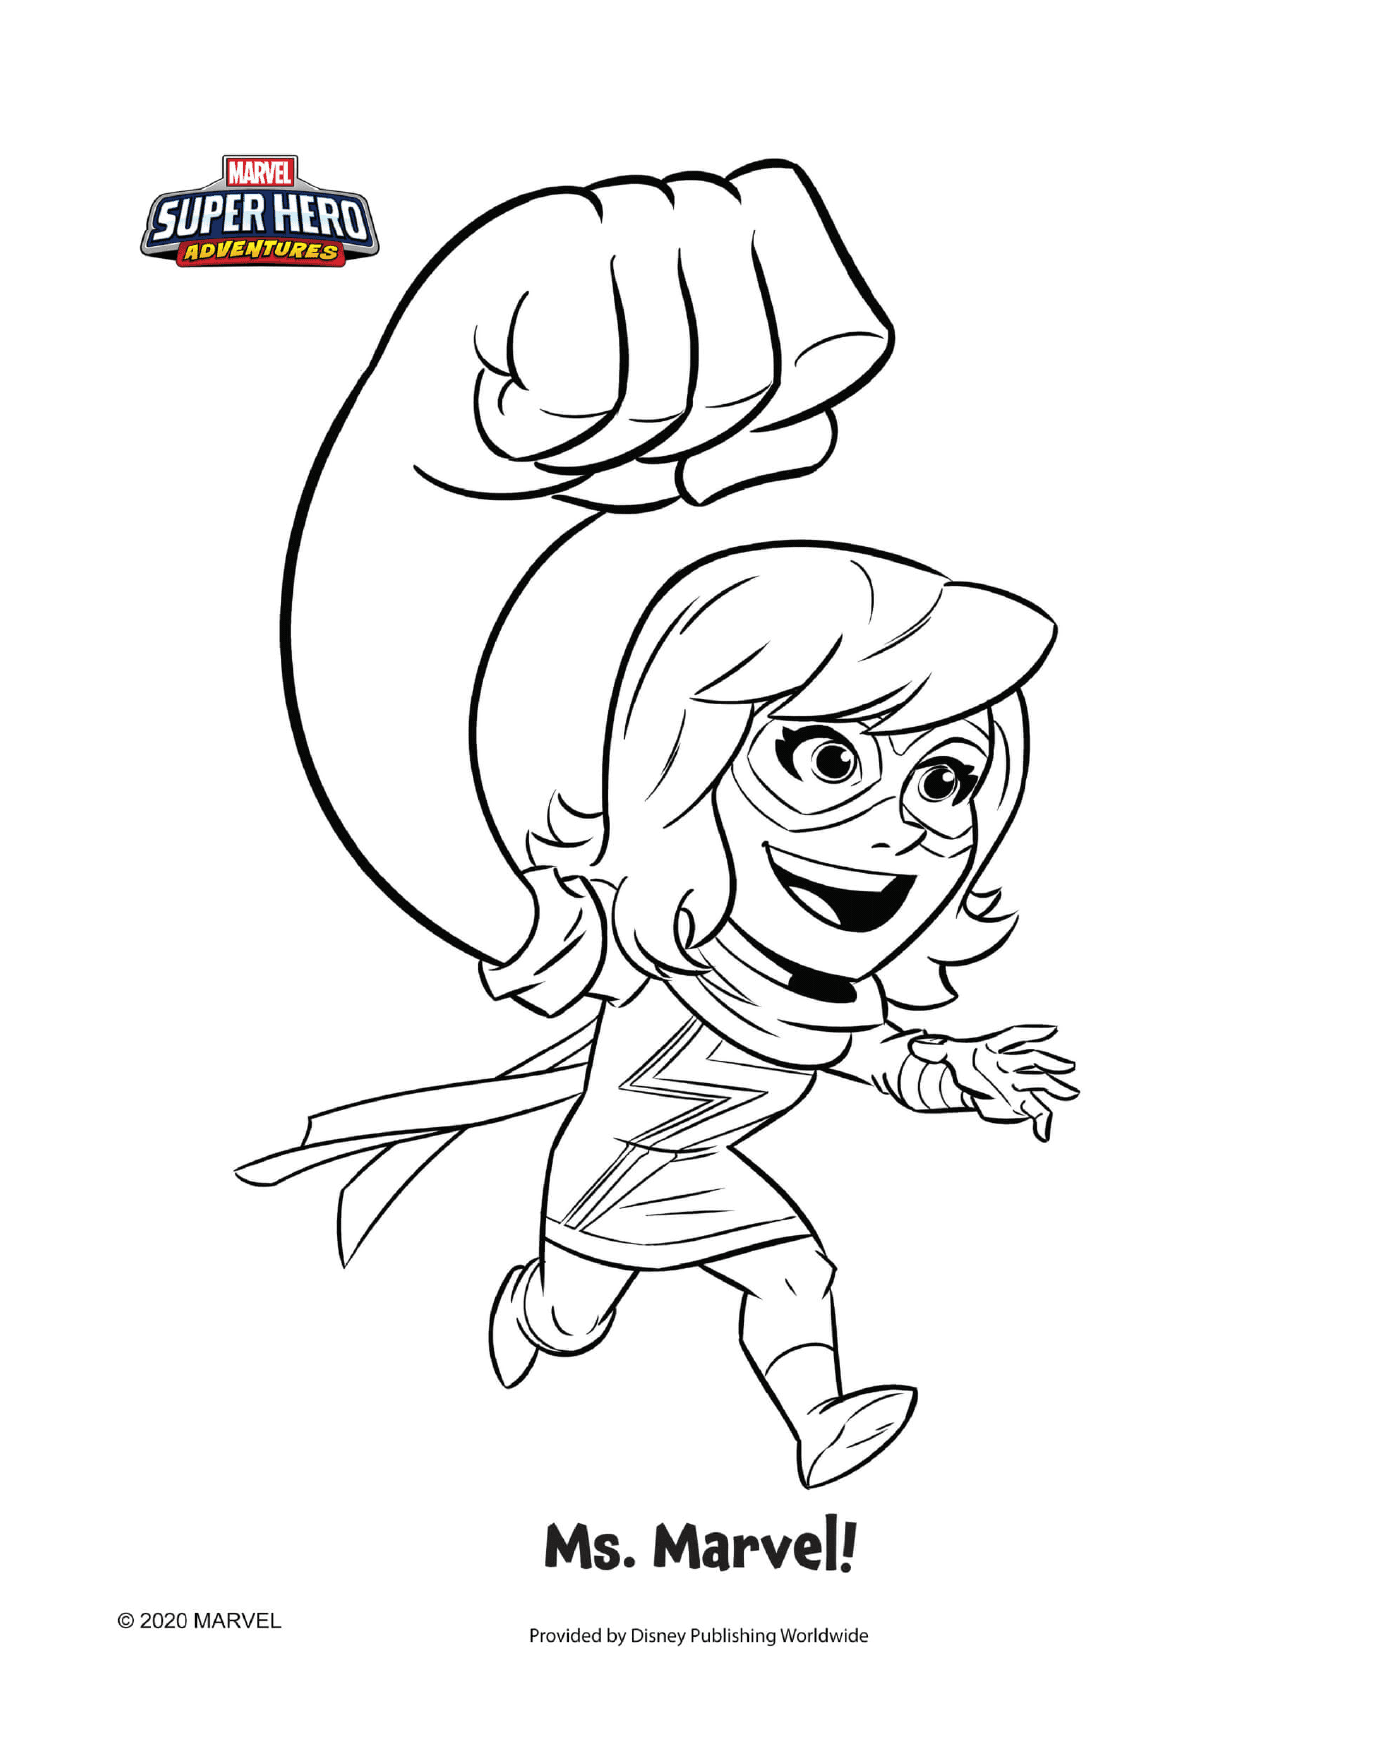  Ms Marvel, a superhero 